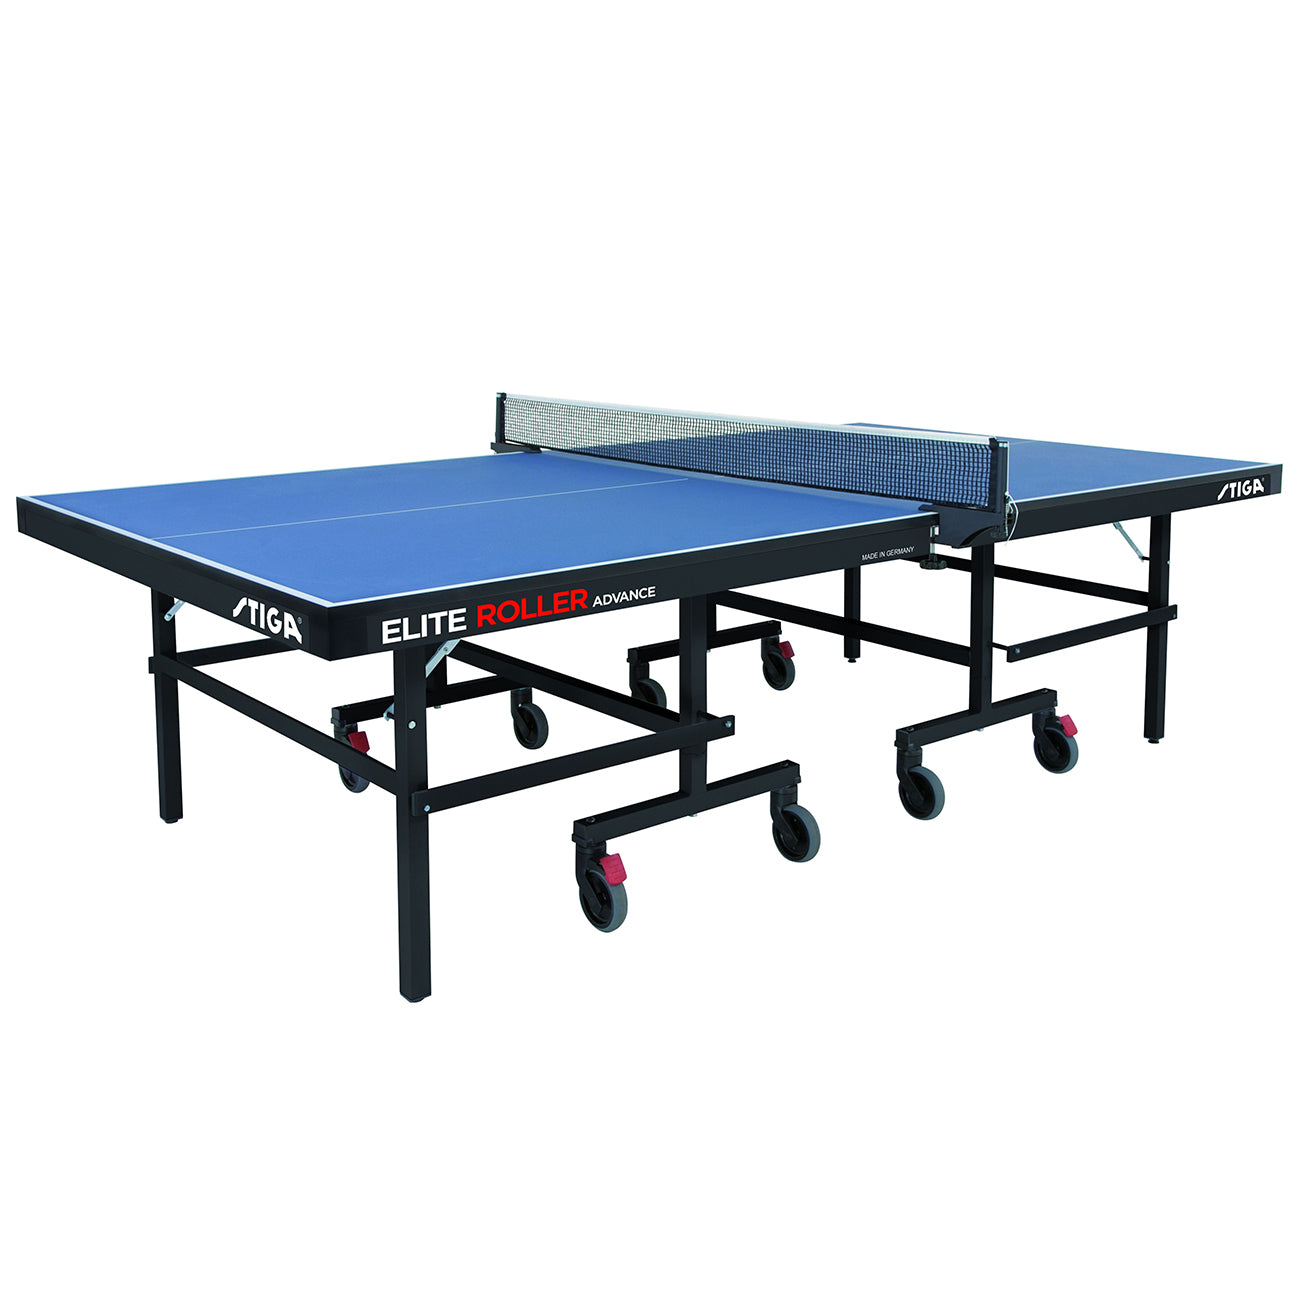 Stiga Elite Roller CSS Advance Indoor Table Tennis Table